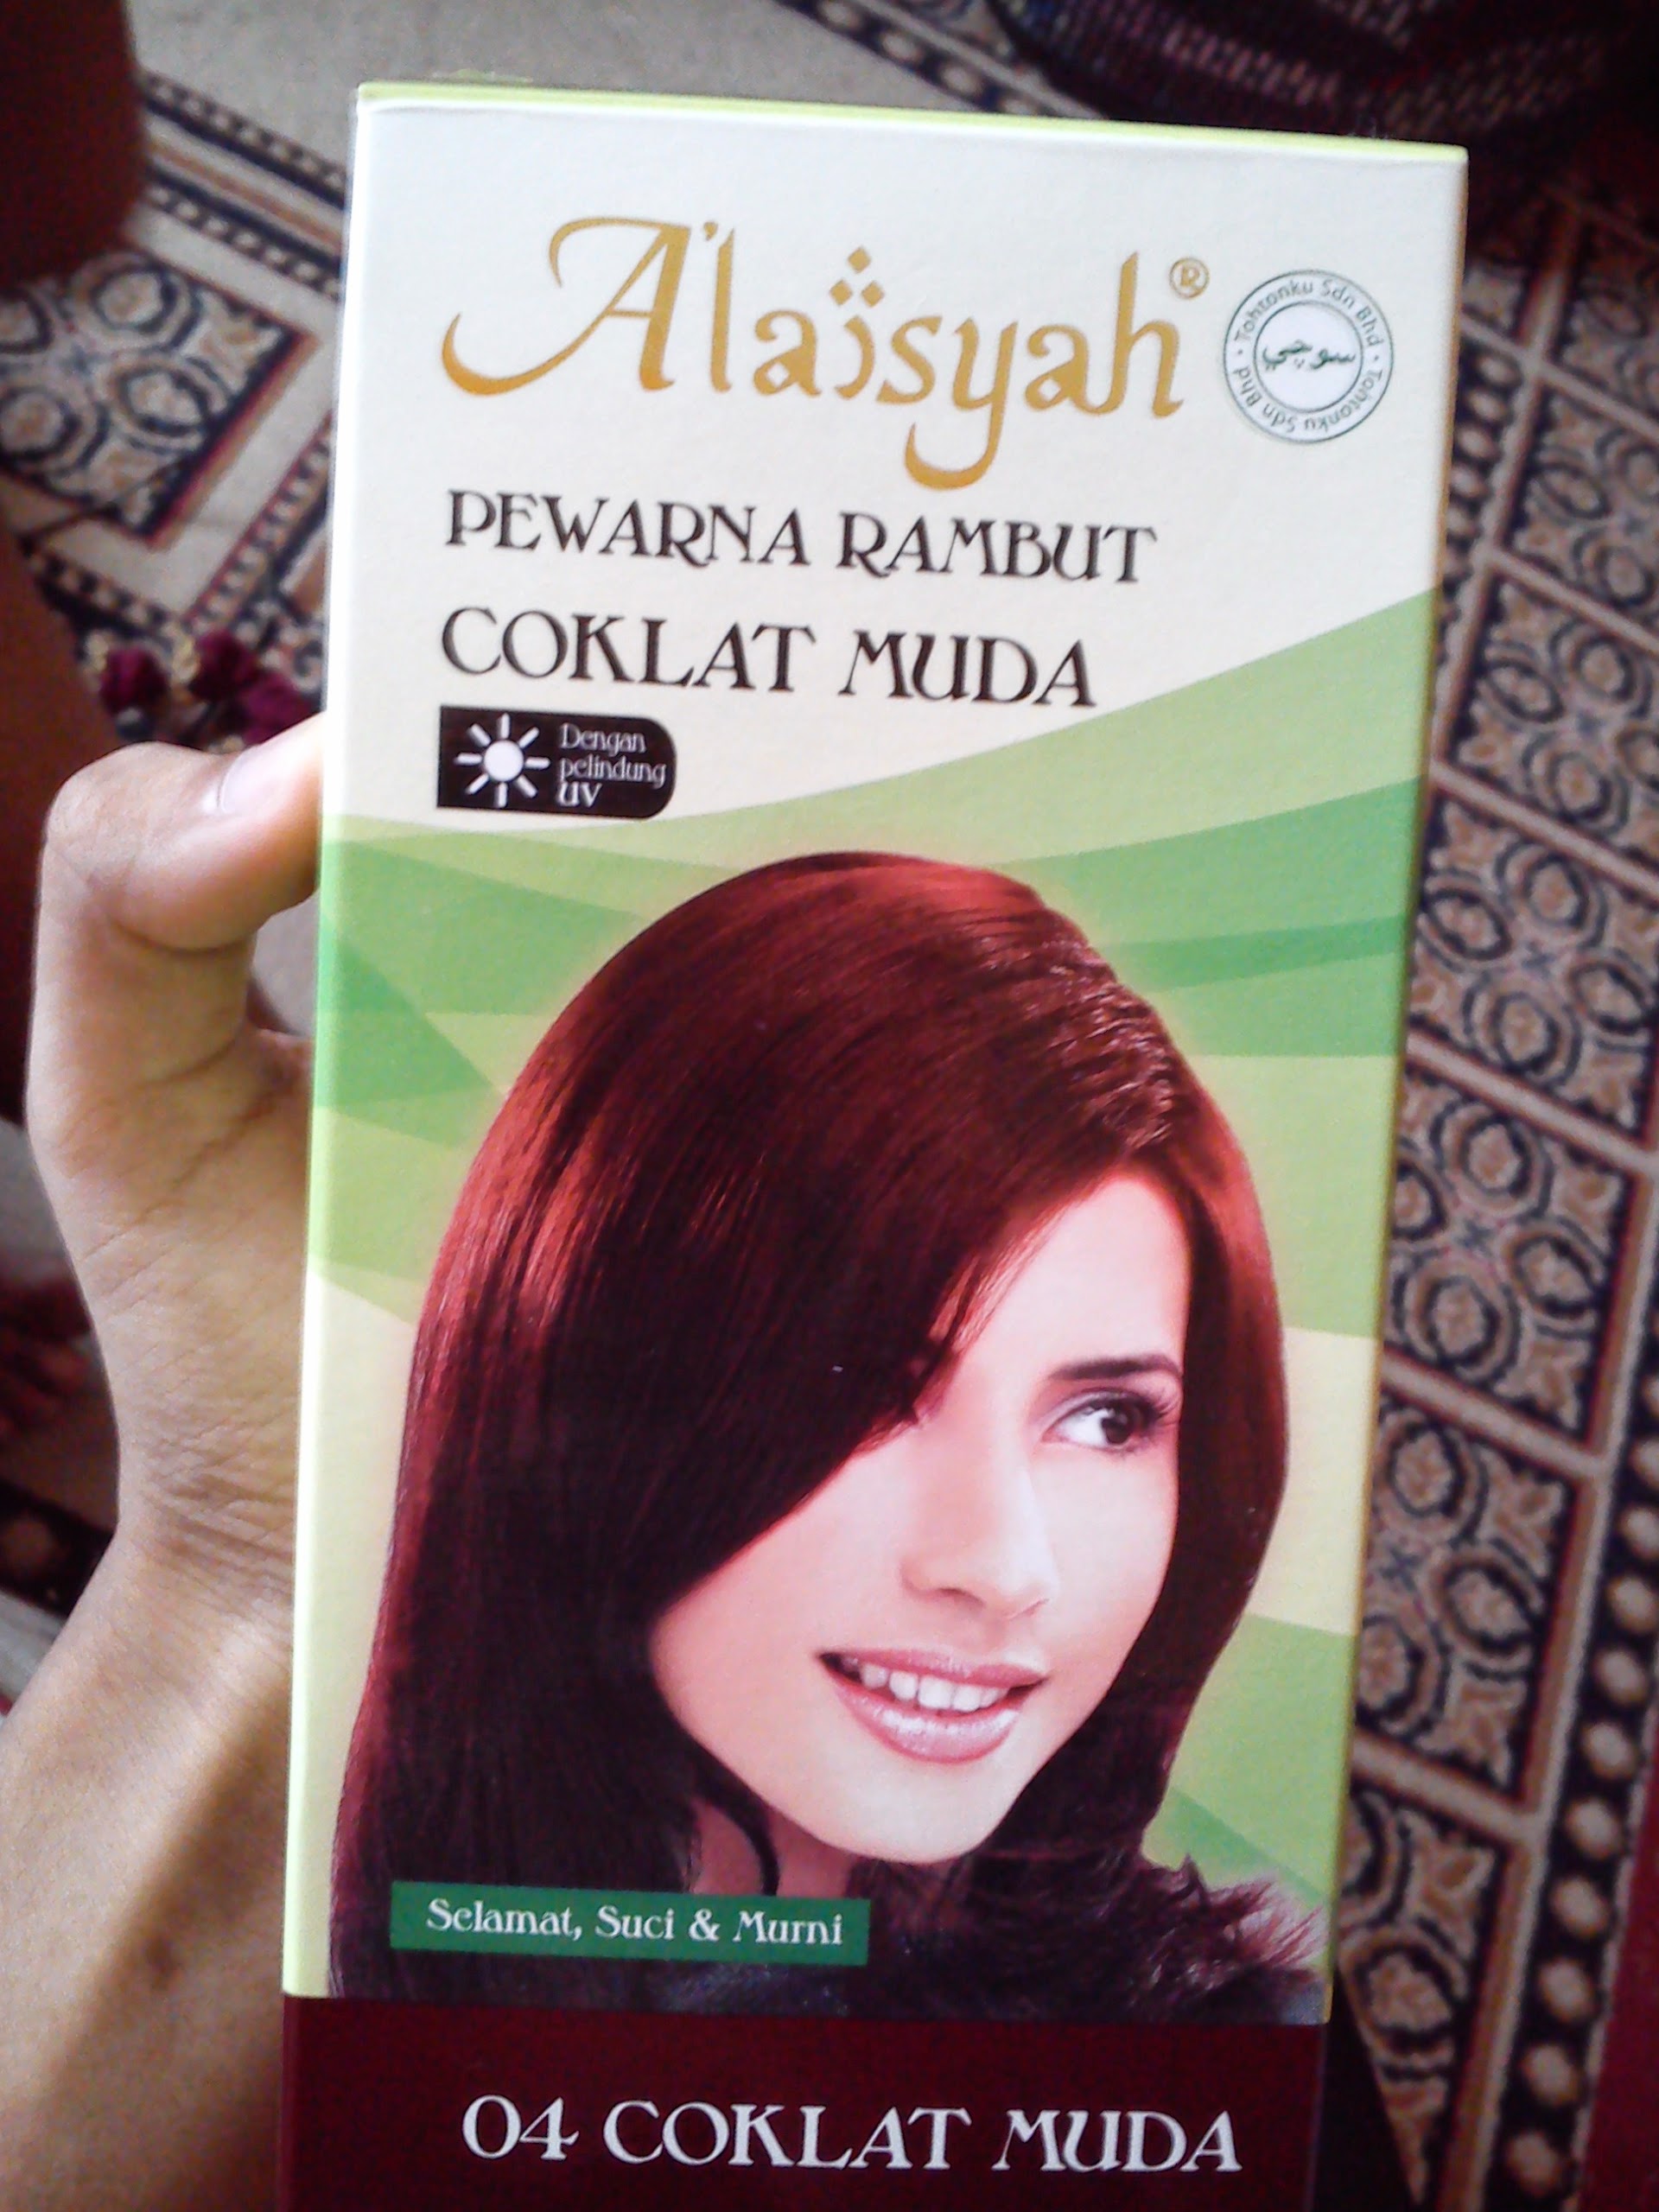 My Fantasy Life Pewarna  Rambut  Alaisyah coklat muda